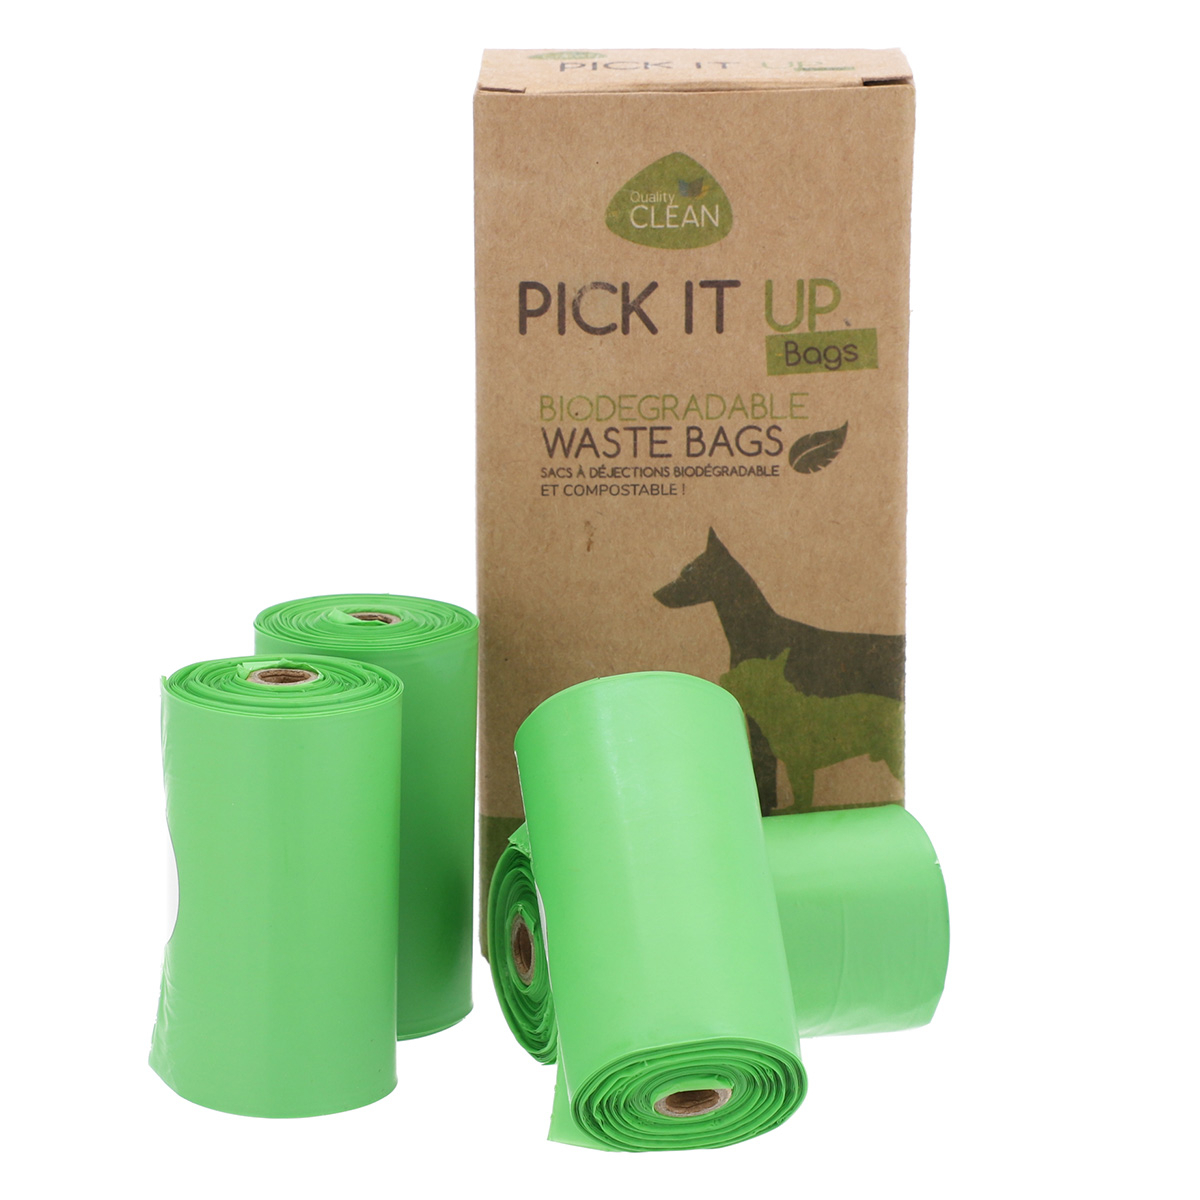 Bolsas recoge excrementos biodegradables Quality Clean Pick It Up Bags